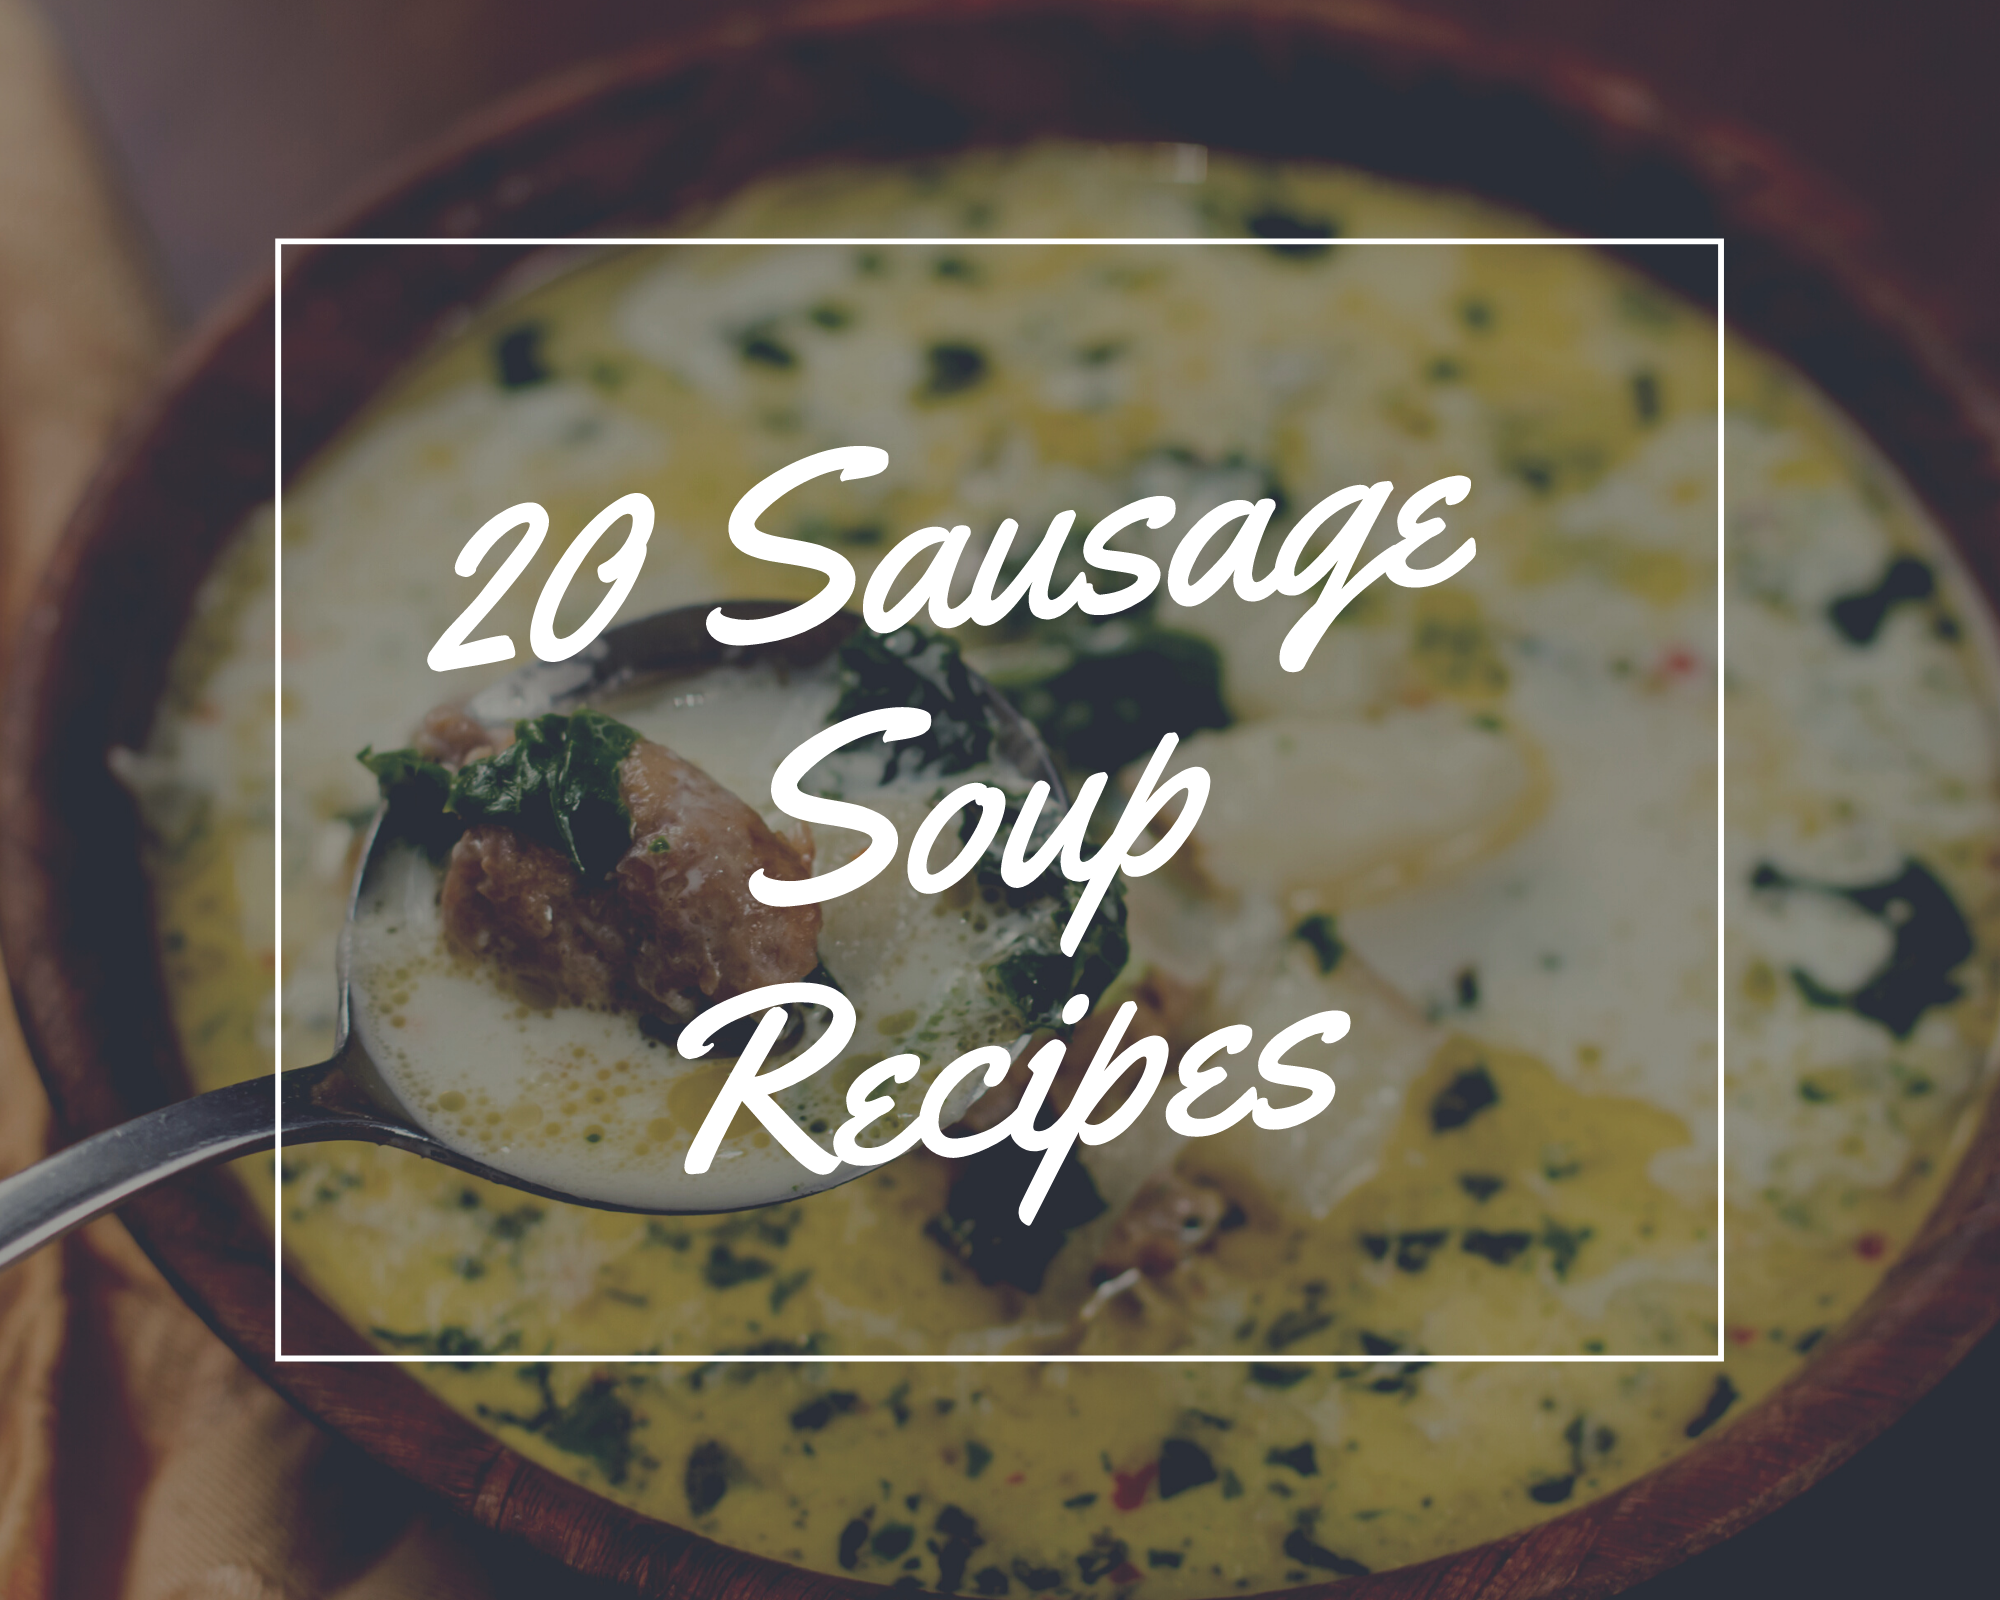 20 sausage soup recipes